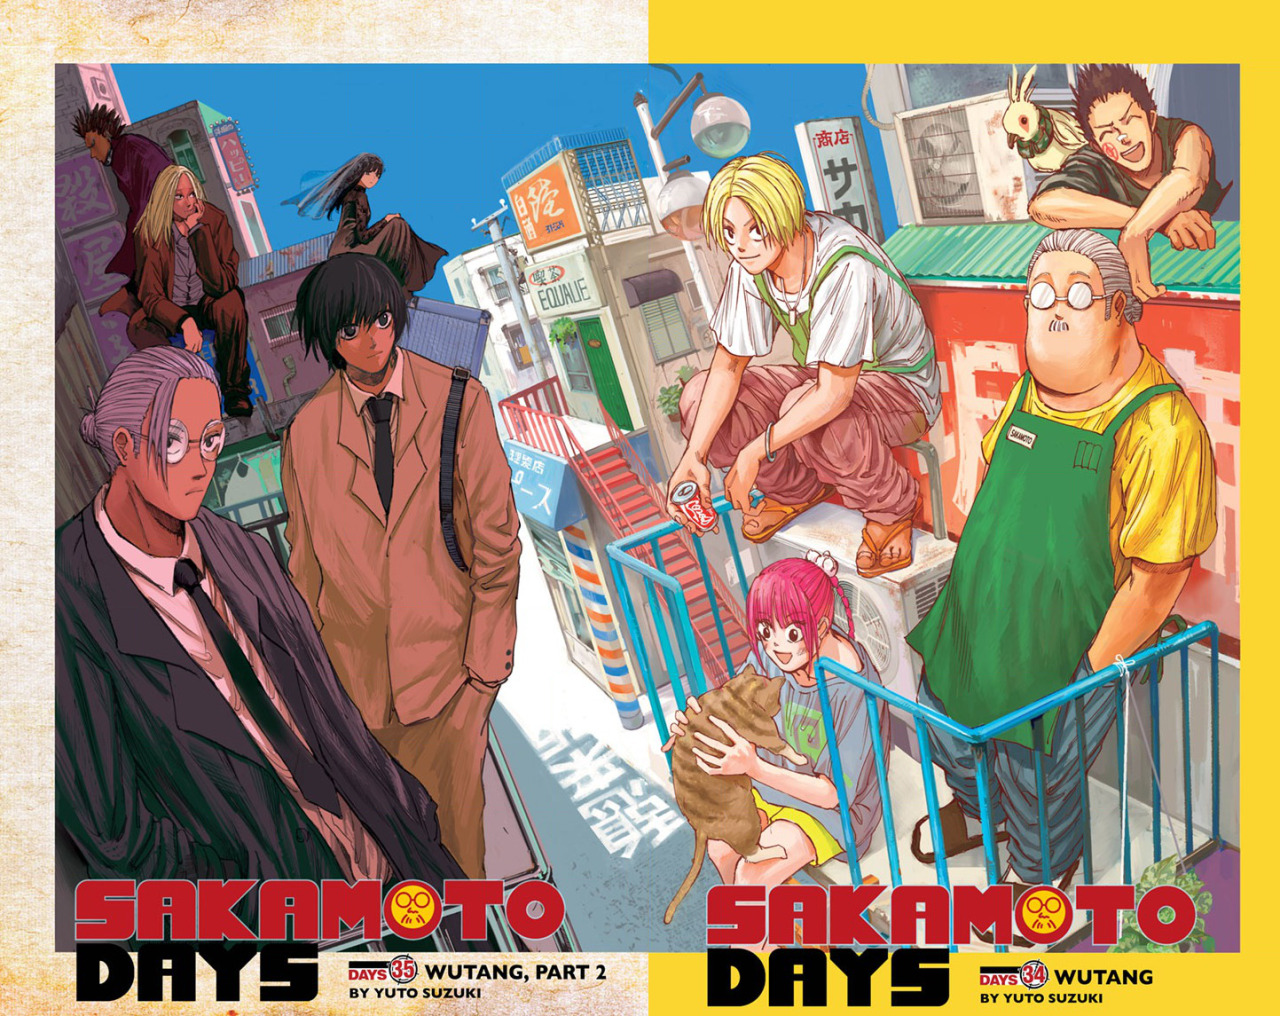 Sakamoto Days #3 – COMIC BOOM!